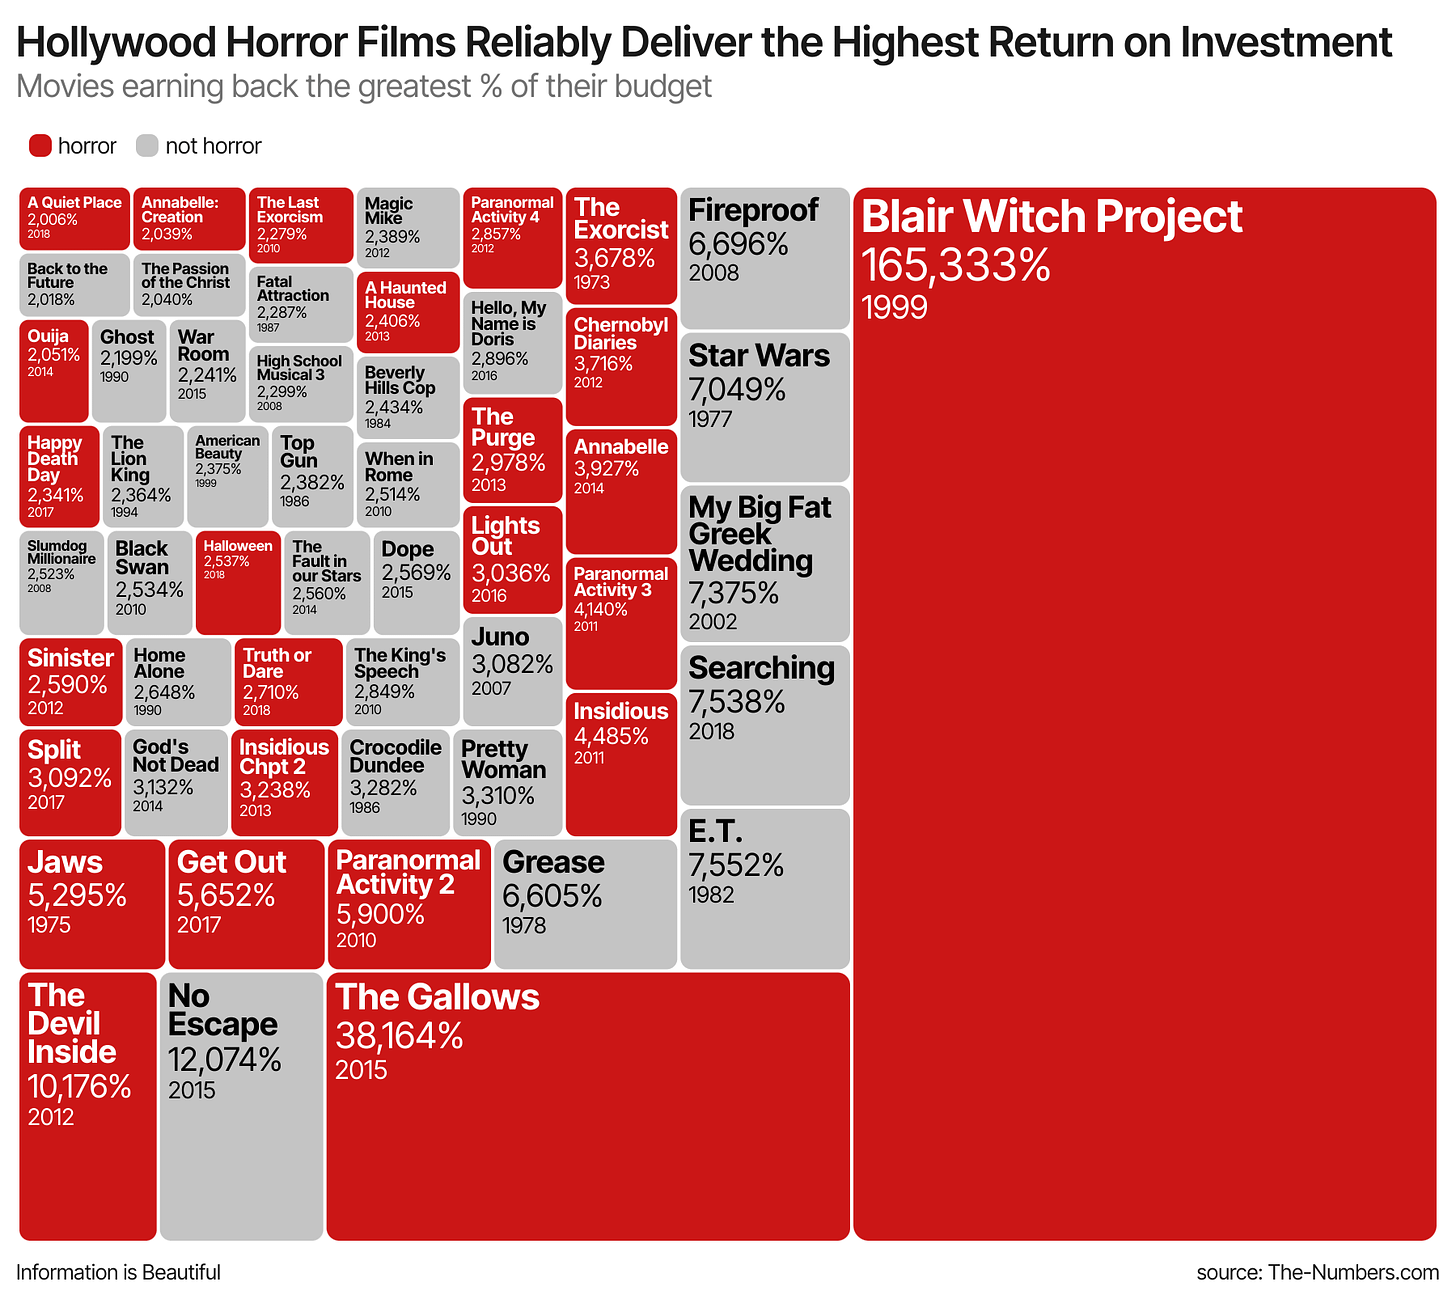 Hollywood Horror Films Reliably Return the Highest Return of Investment